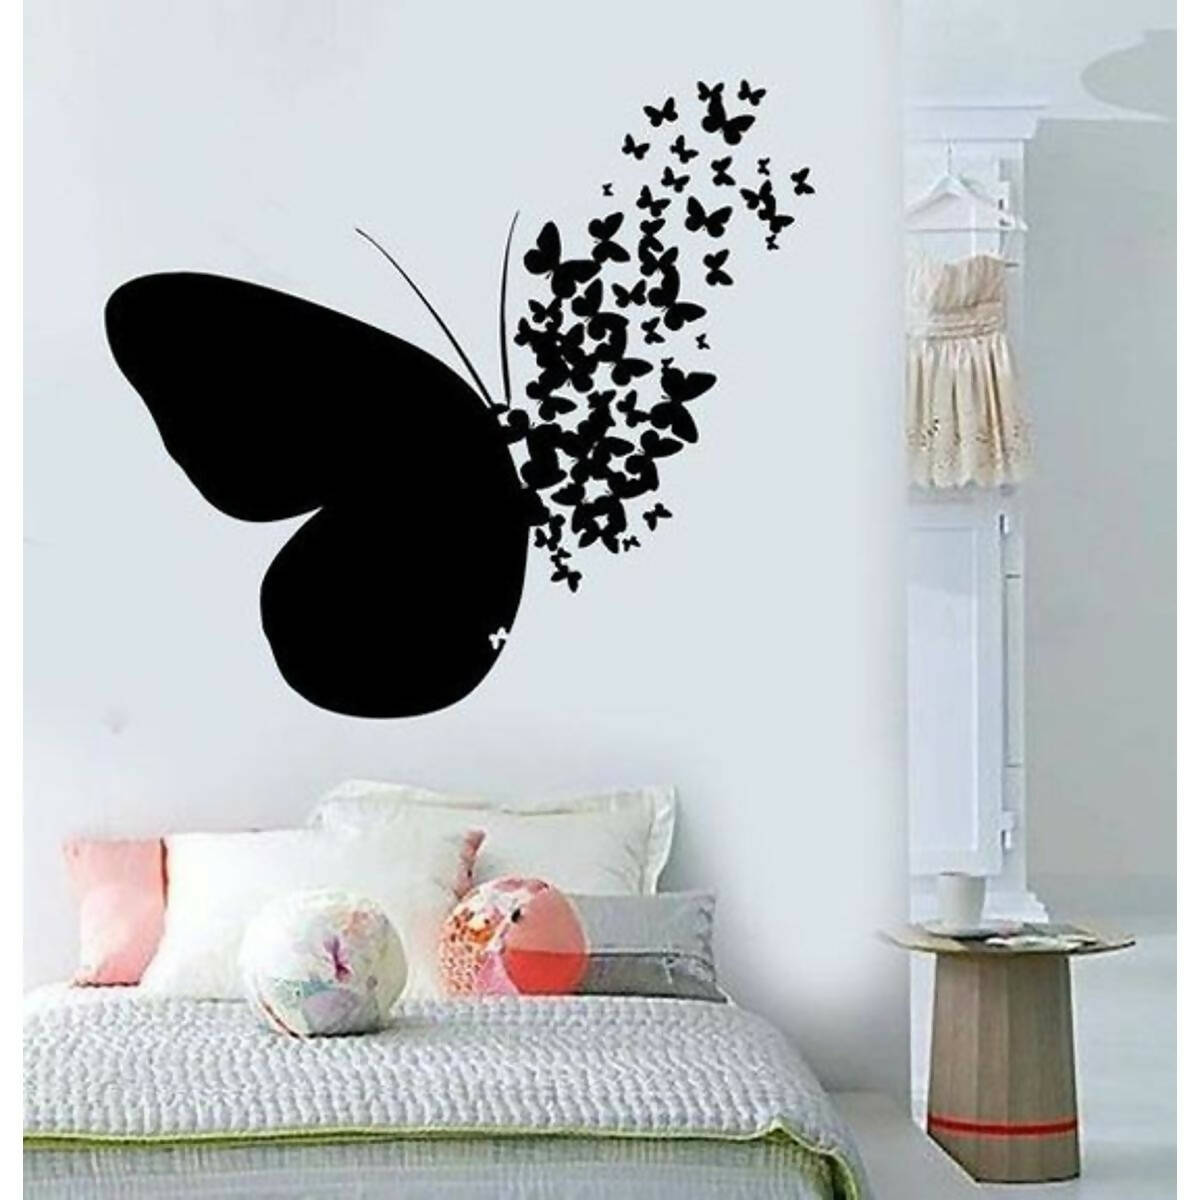 Flying Butterflies Wooden Wall Decor Big Butterfly Wall Decor, 3D Self Adhesive Wall Clock